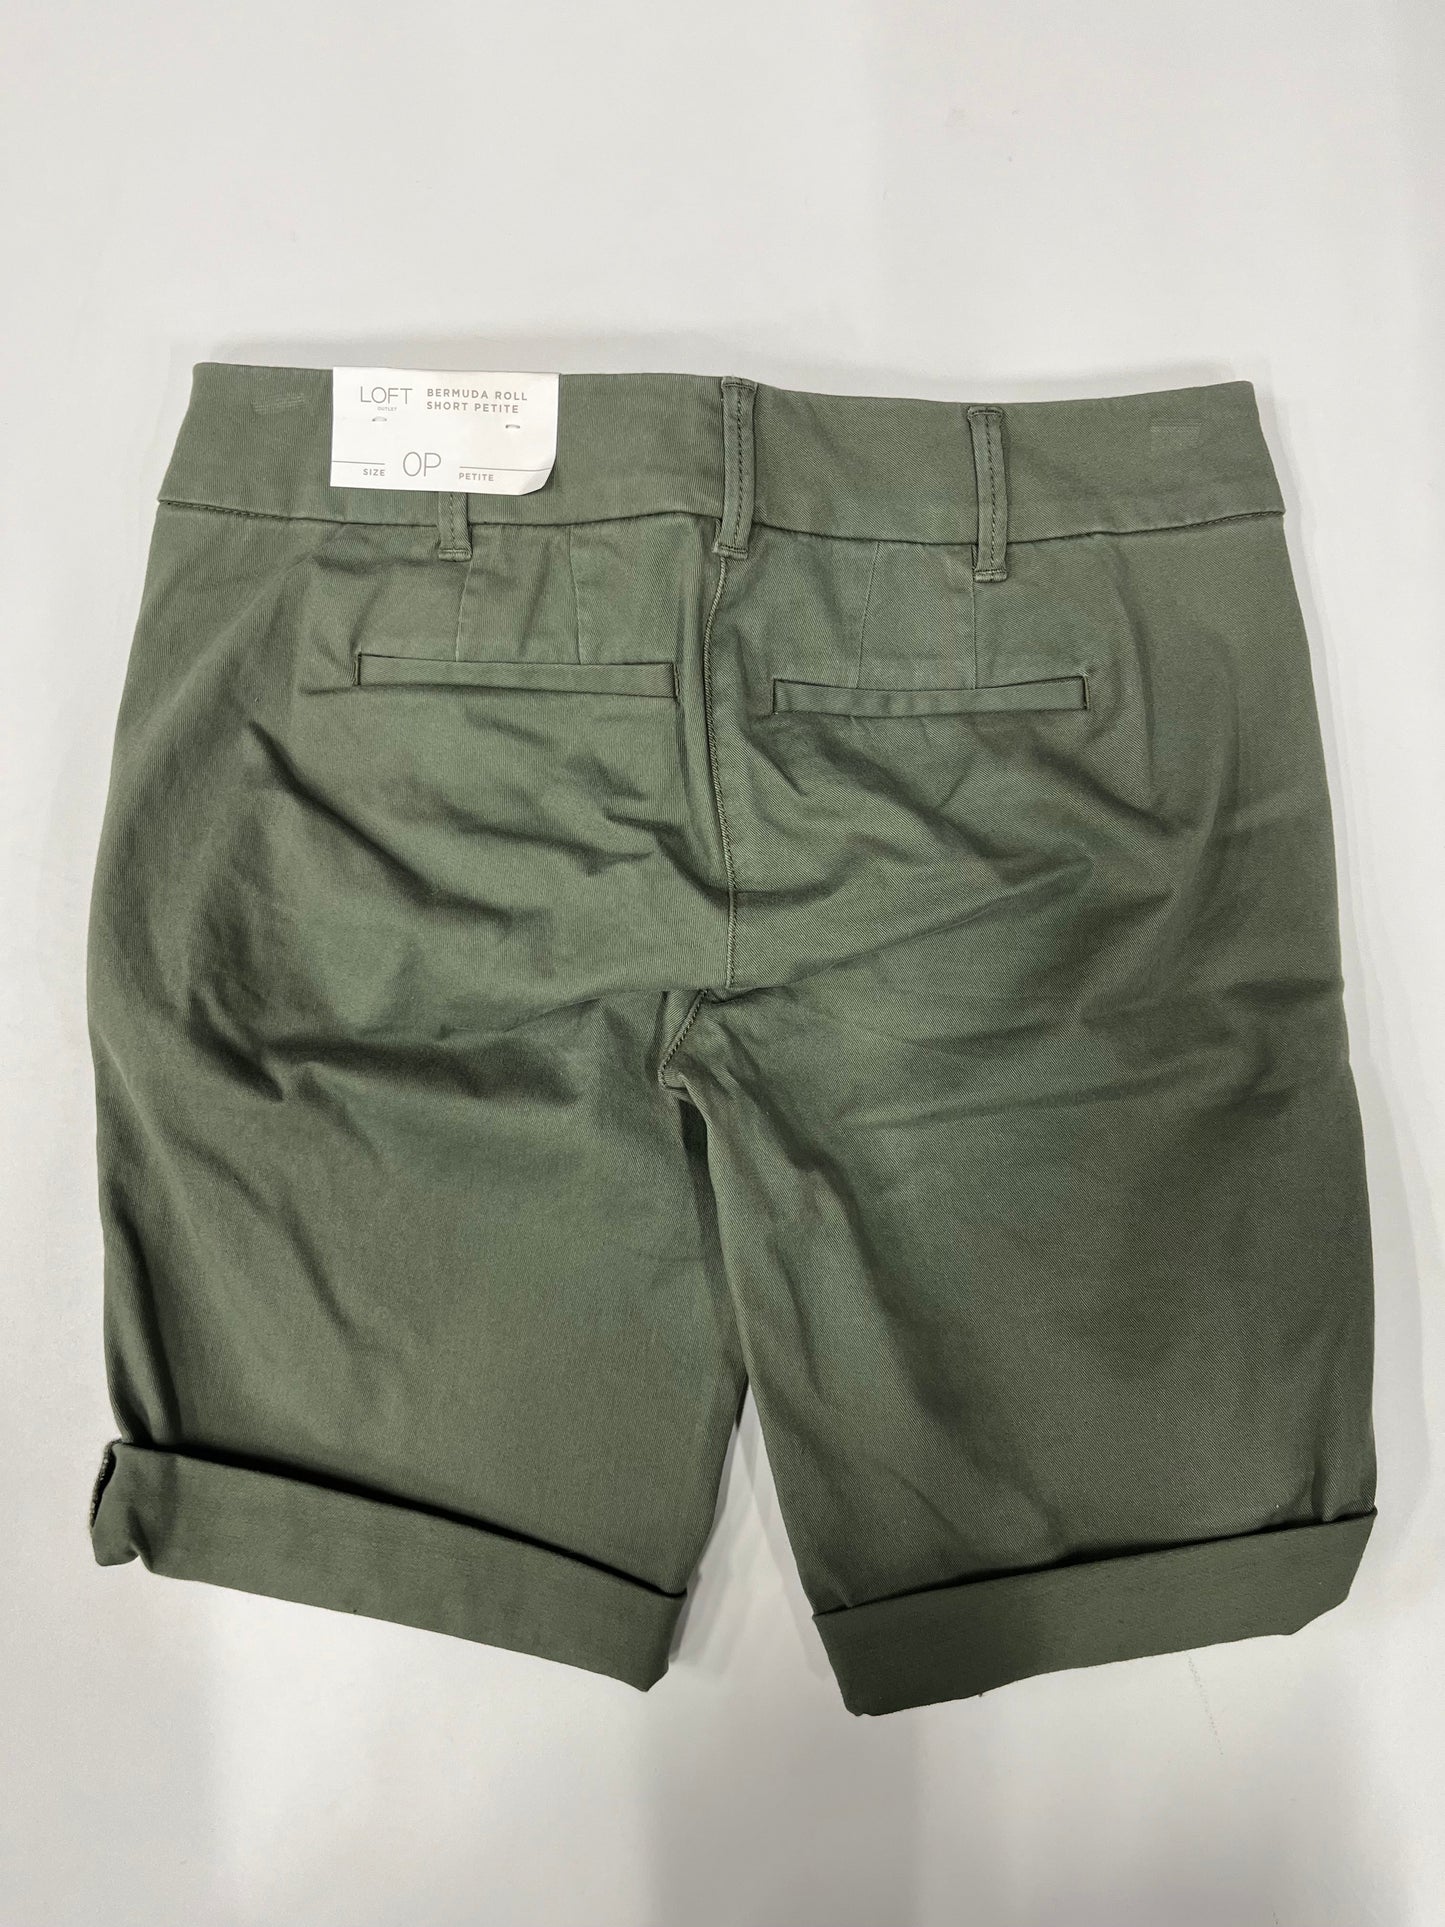 Shorts By Ann Taylor Loft NWT Size: 0